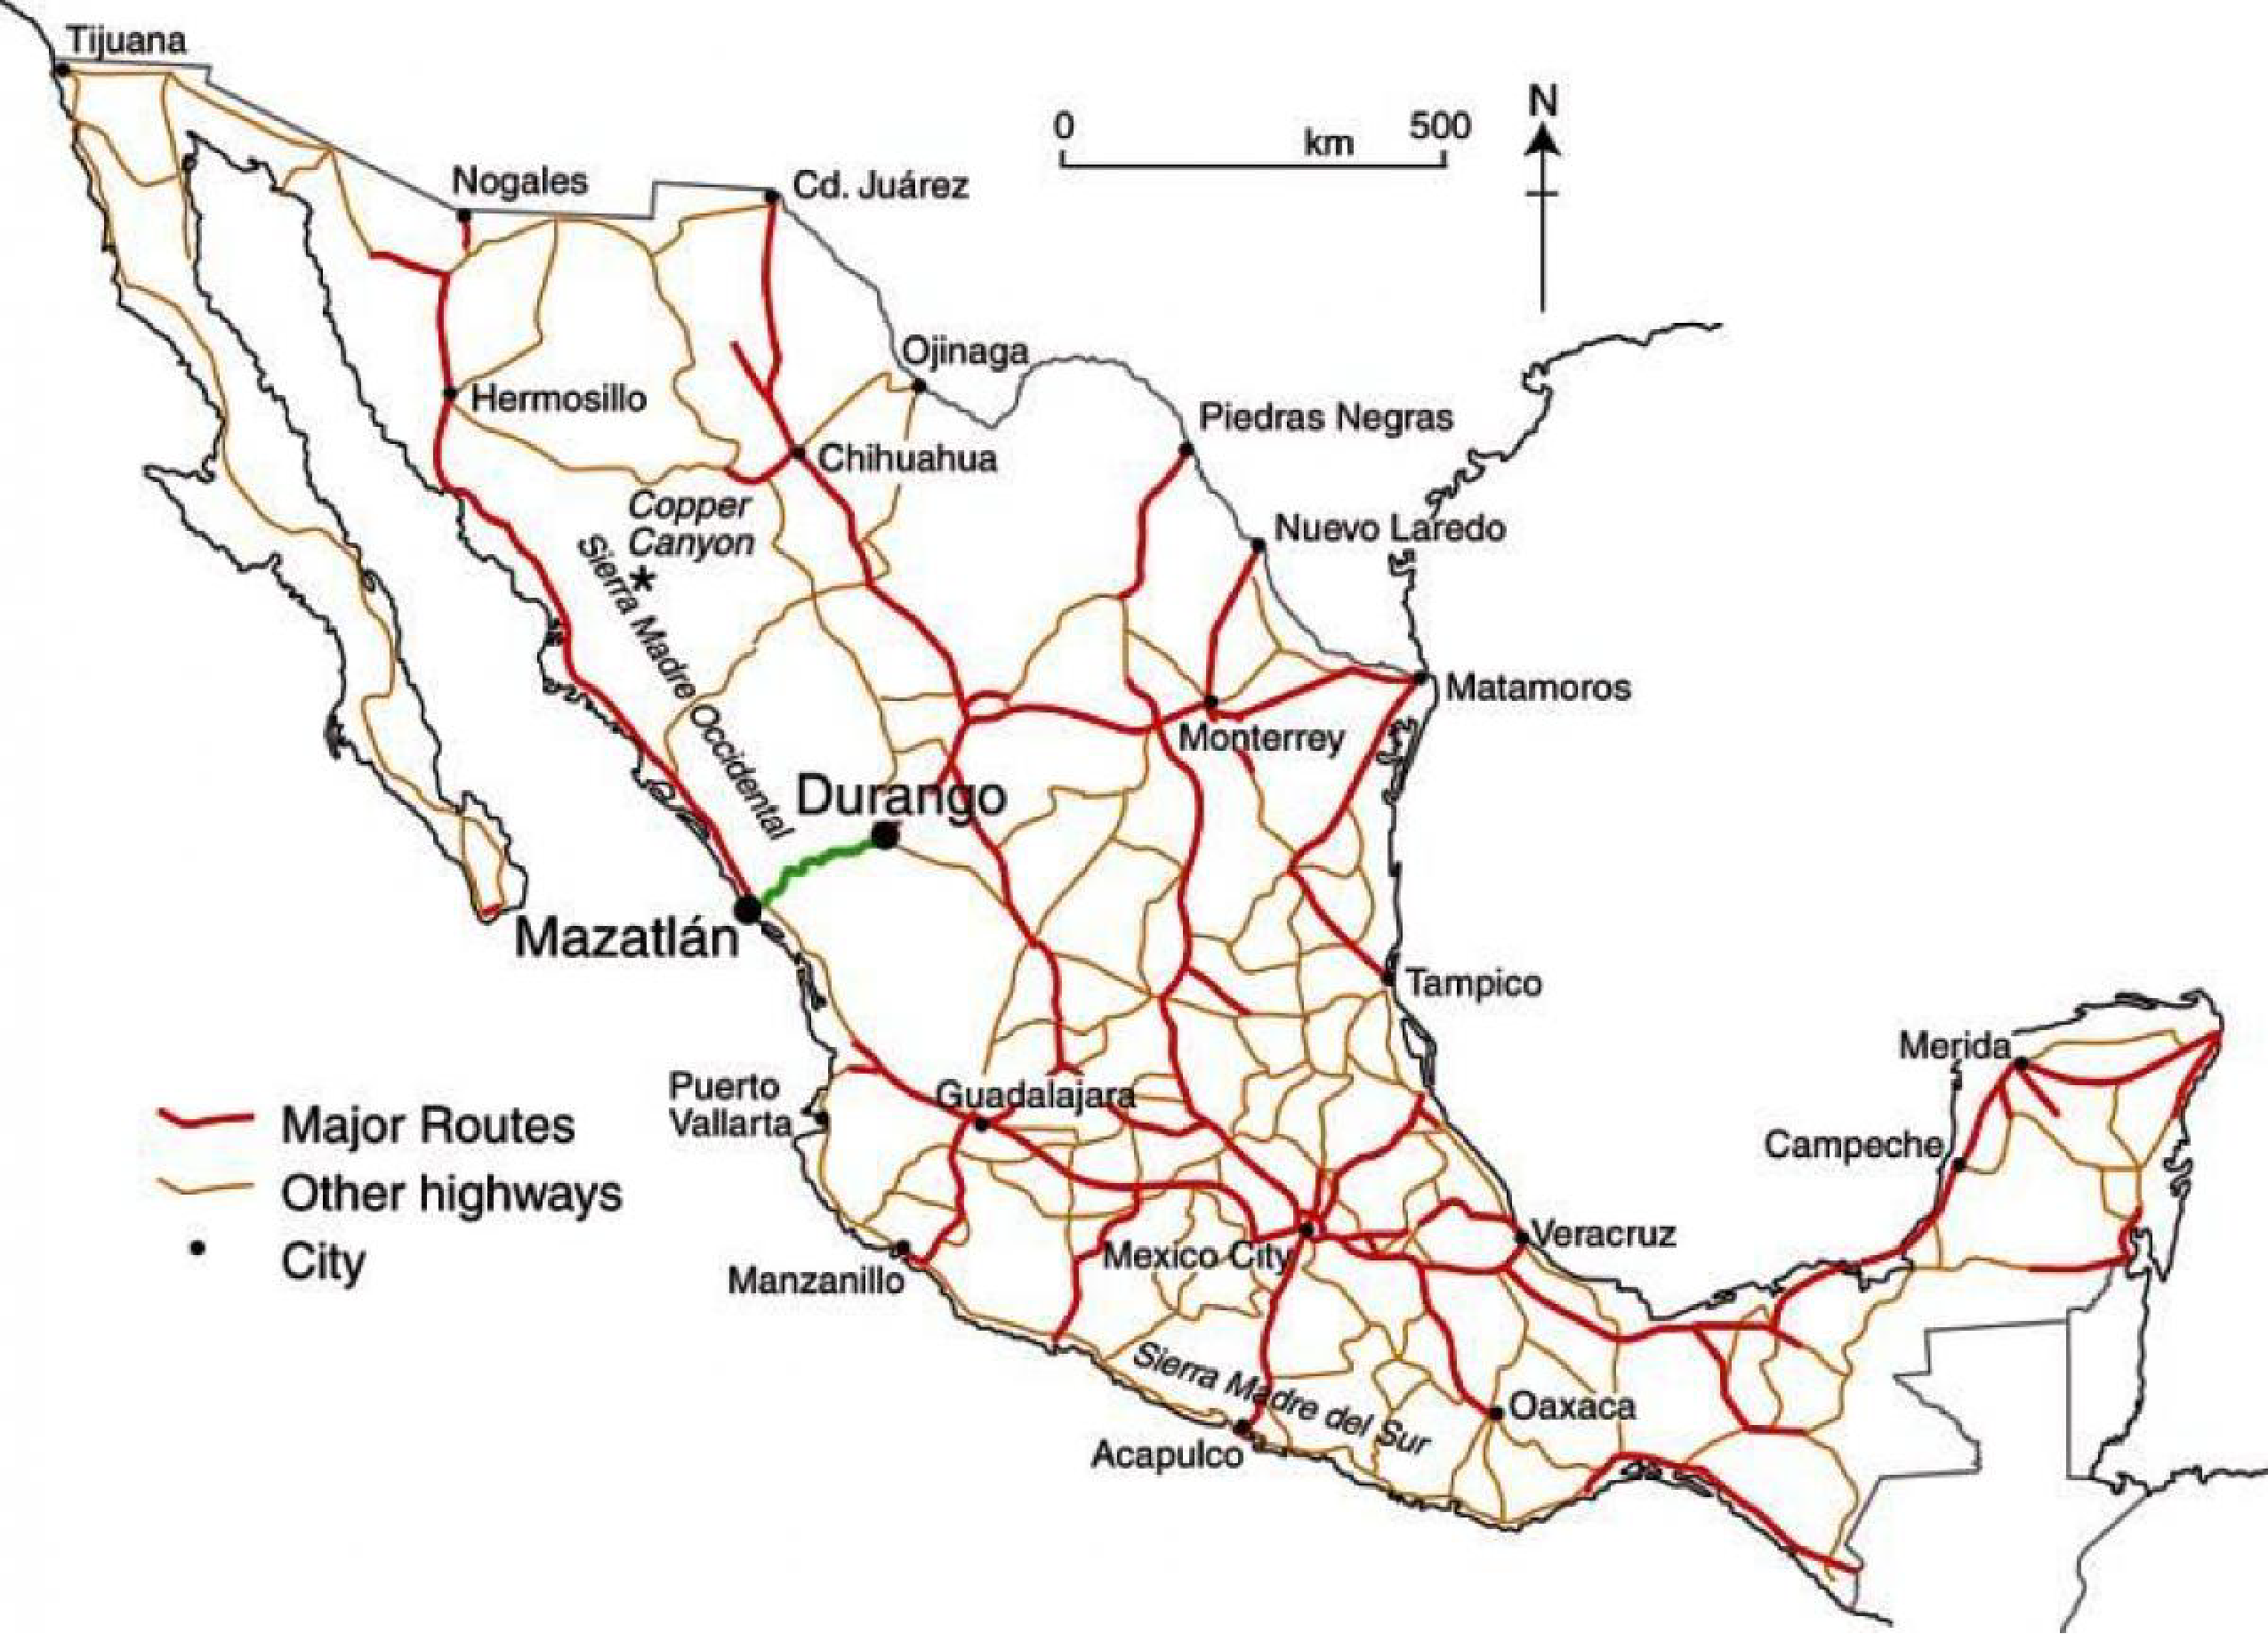 Figure 3.4.6.1  Reseau routier federal Mexicain (reseau structurant)